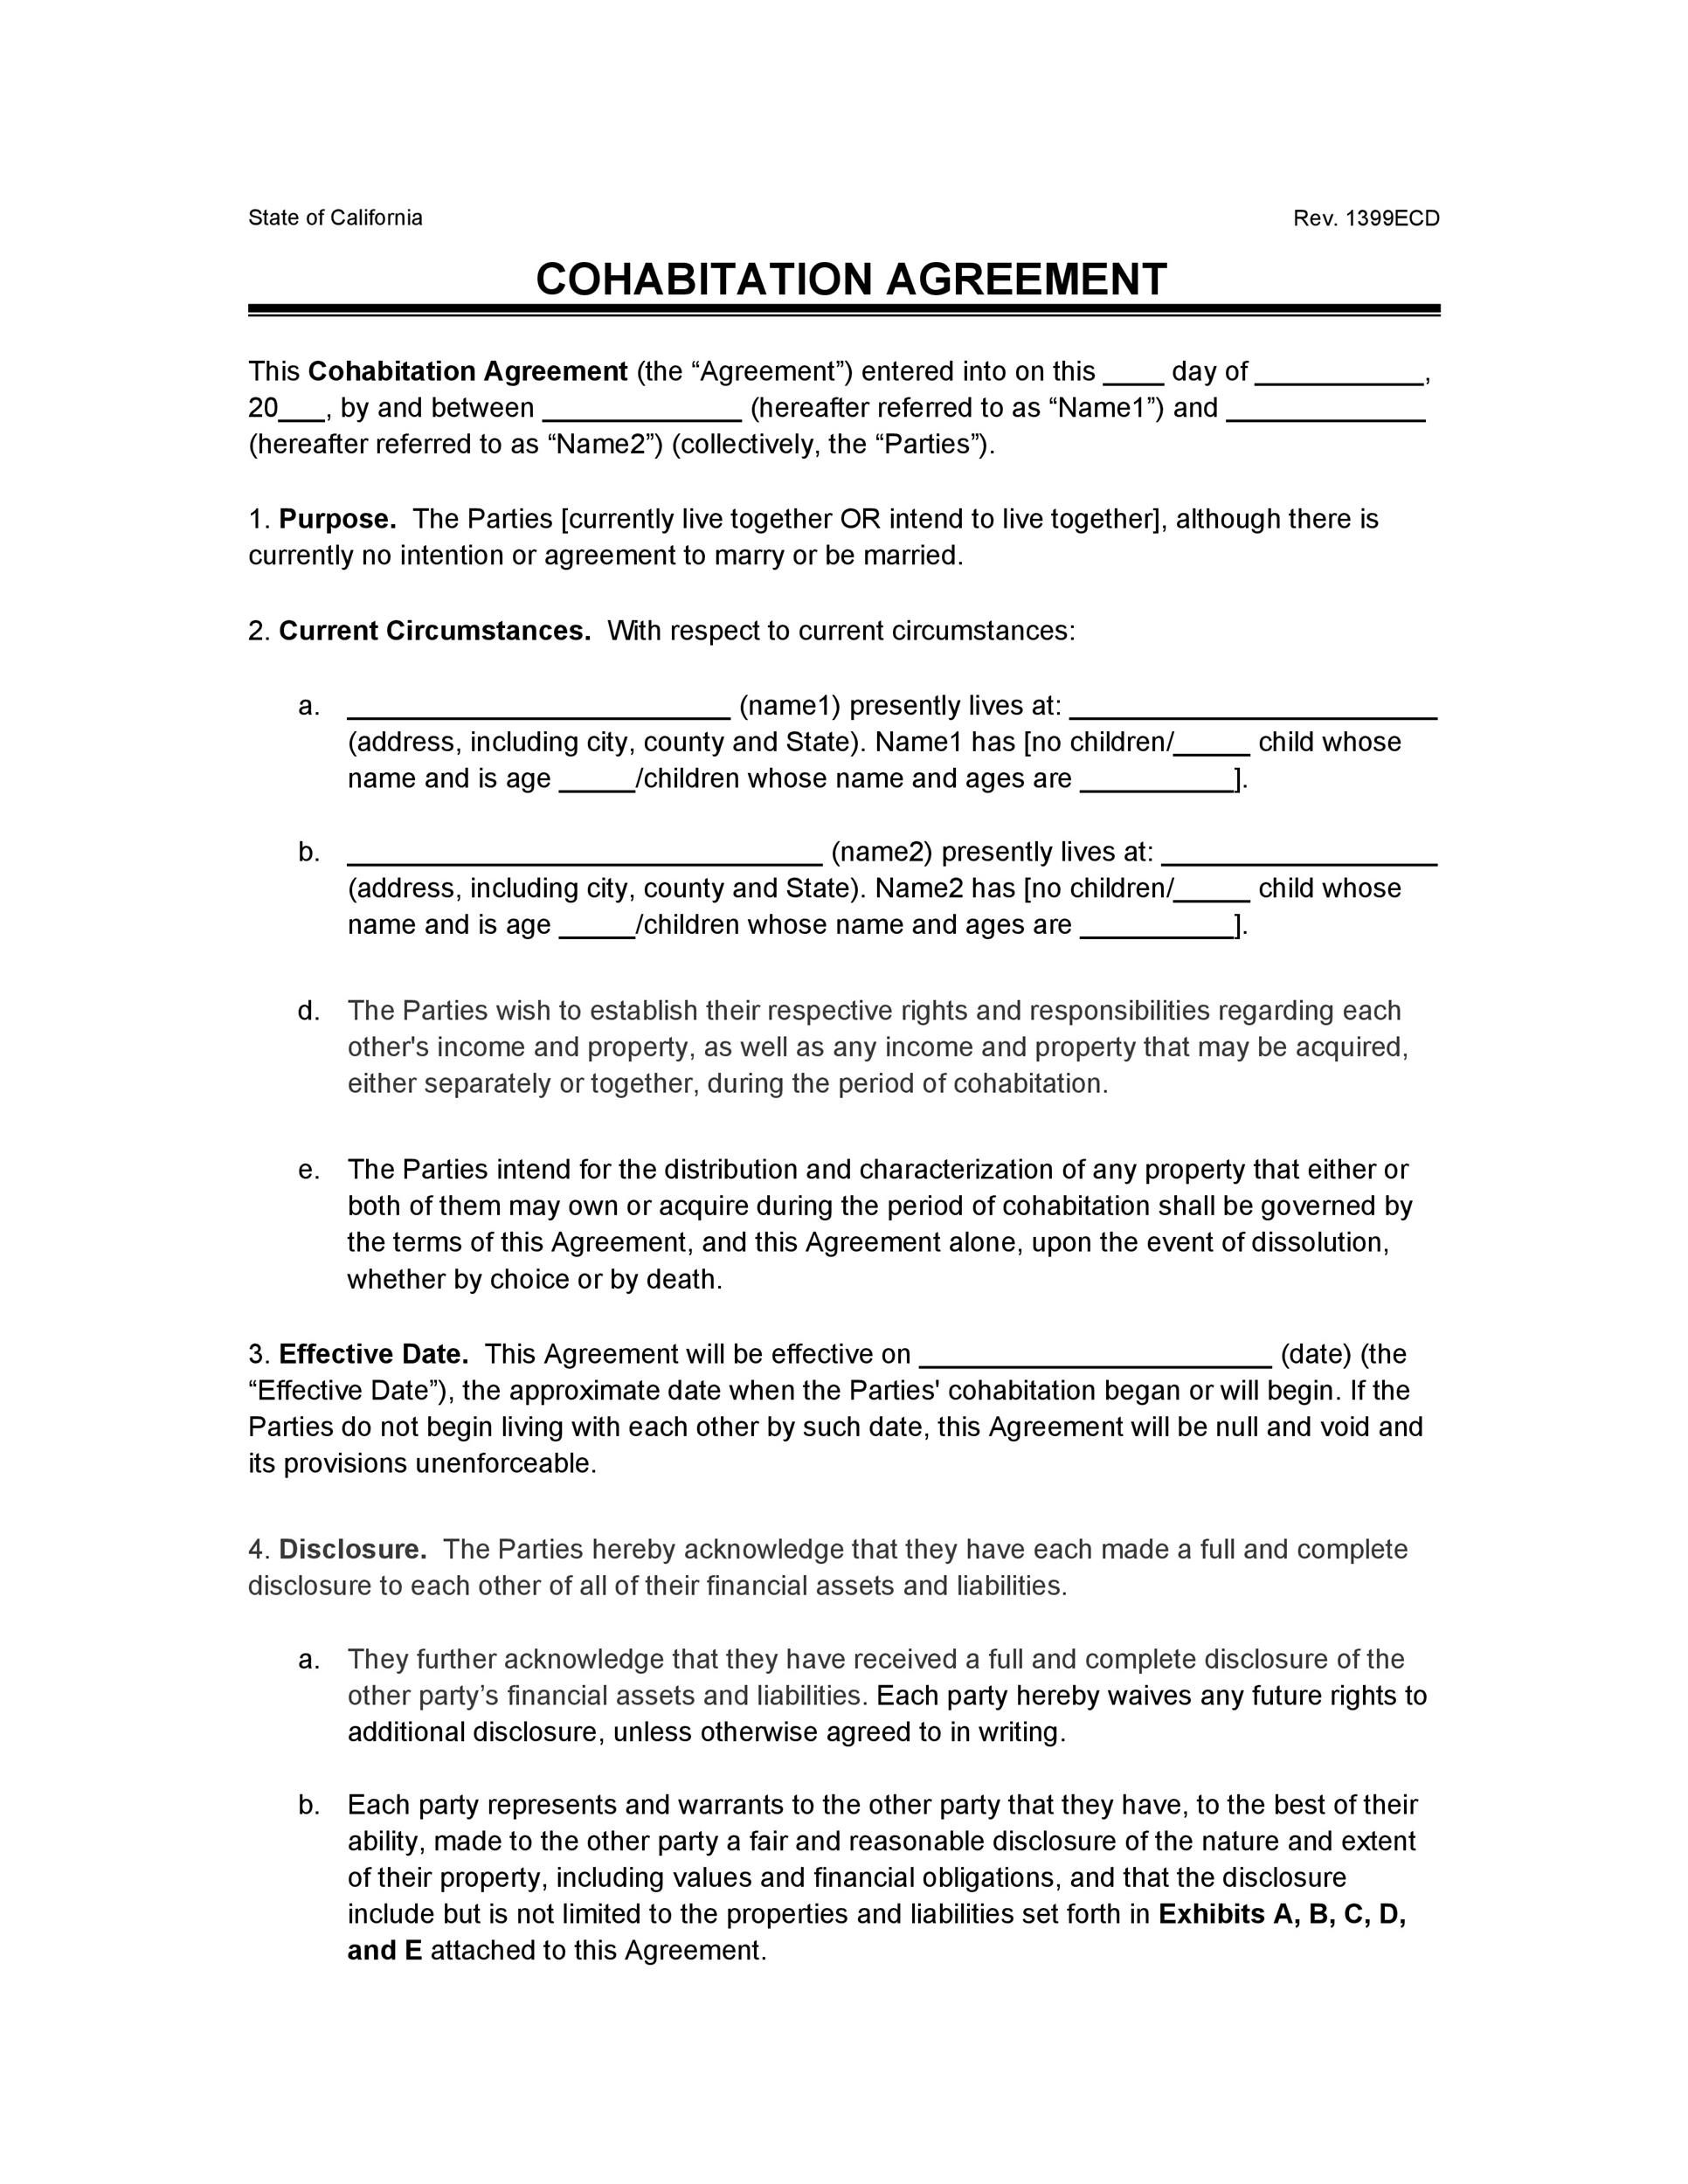 Free cohabitation agreement template 04